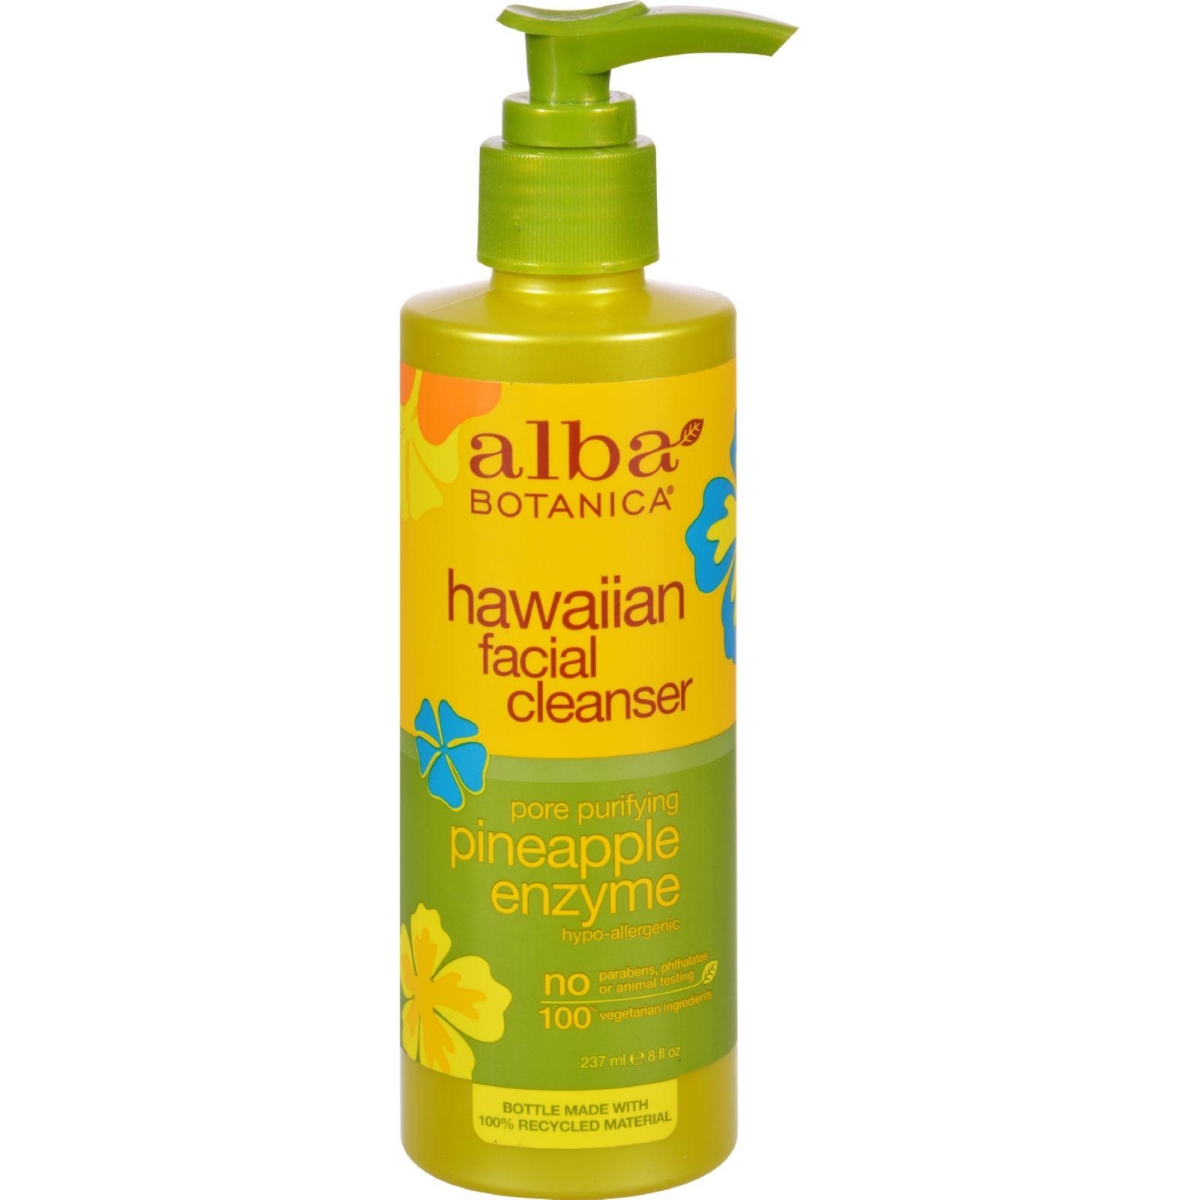 Hg0389932 8 Fl Oz Enzyme Facial Cleanser, Pineapple